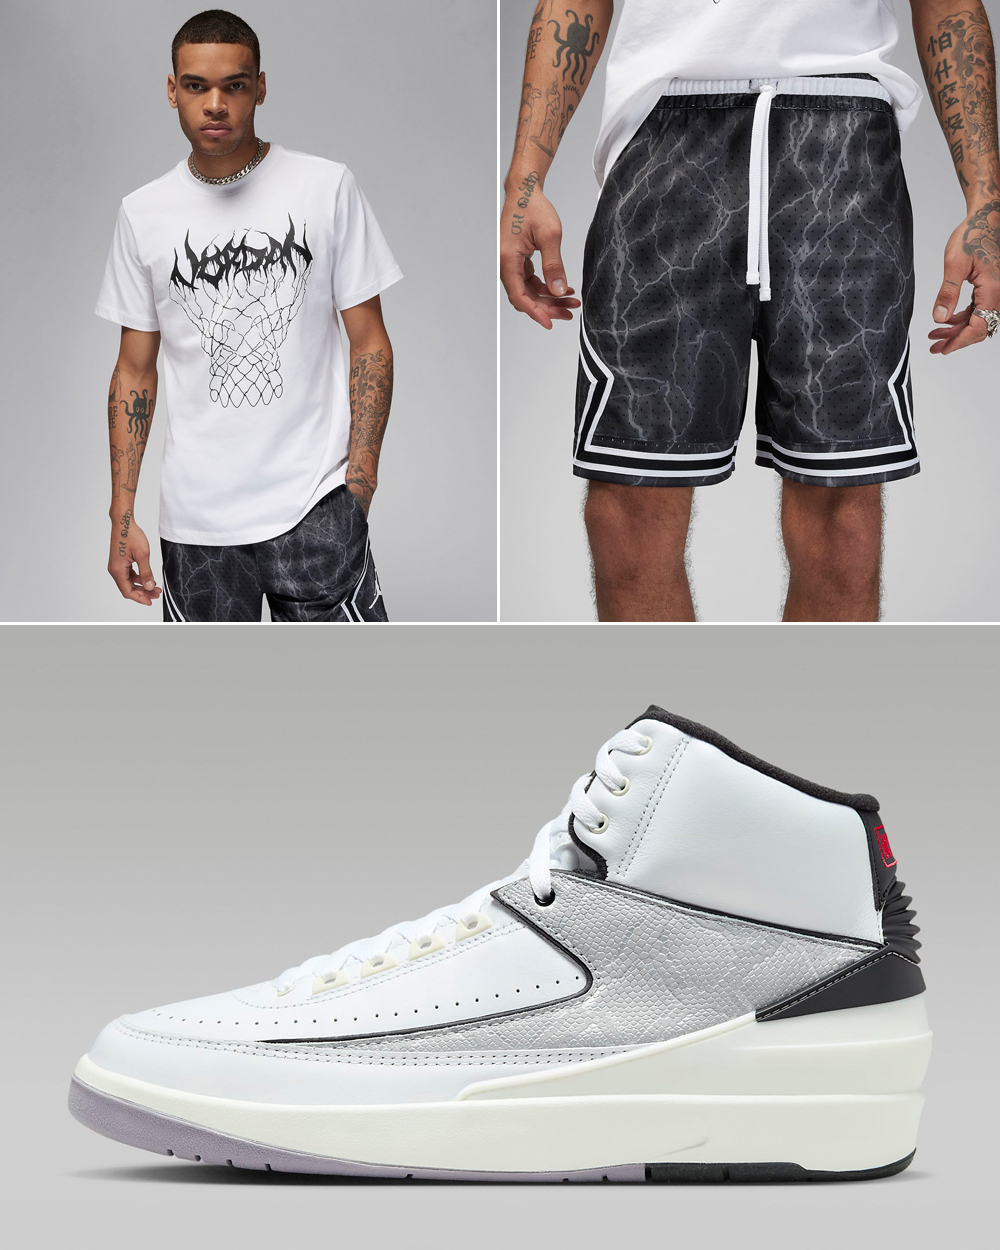 Air-Jordan-2-Python-Long-Sleeve-Shirt-Shorts-Matching-Outfit